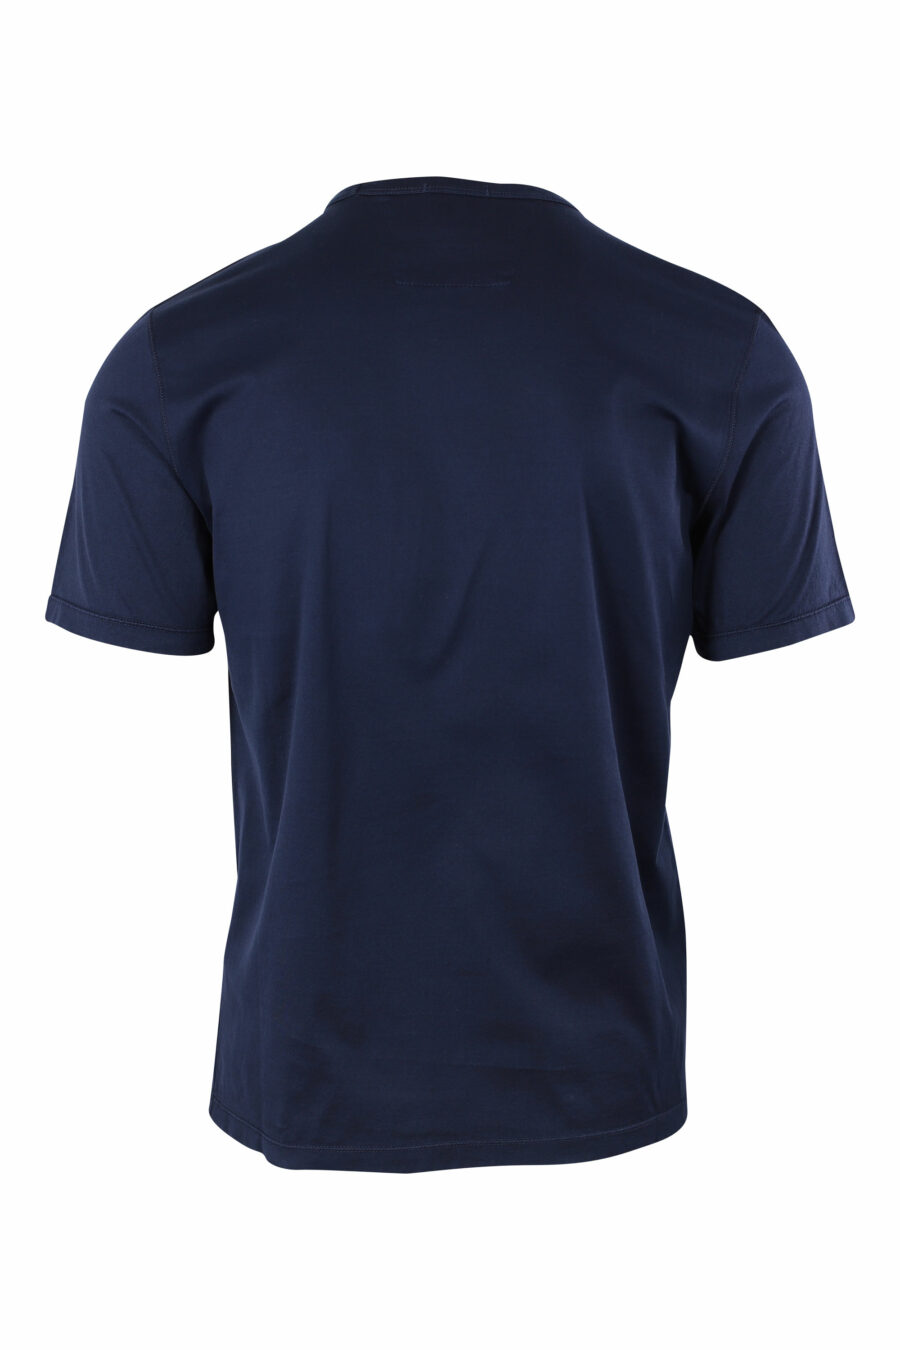 T-shirt azul-escura com mini logótipo - IMG 9650